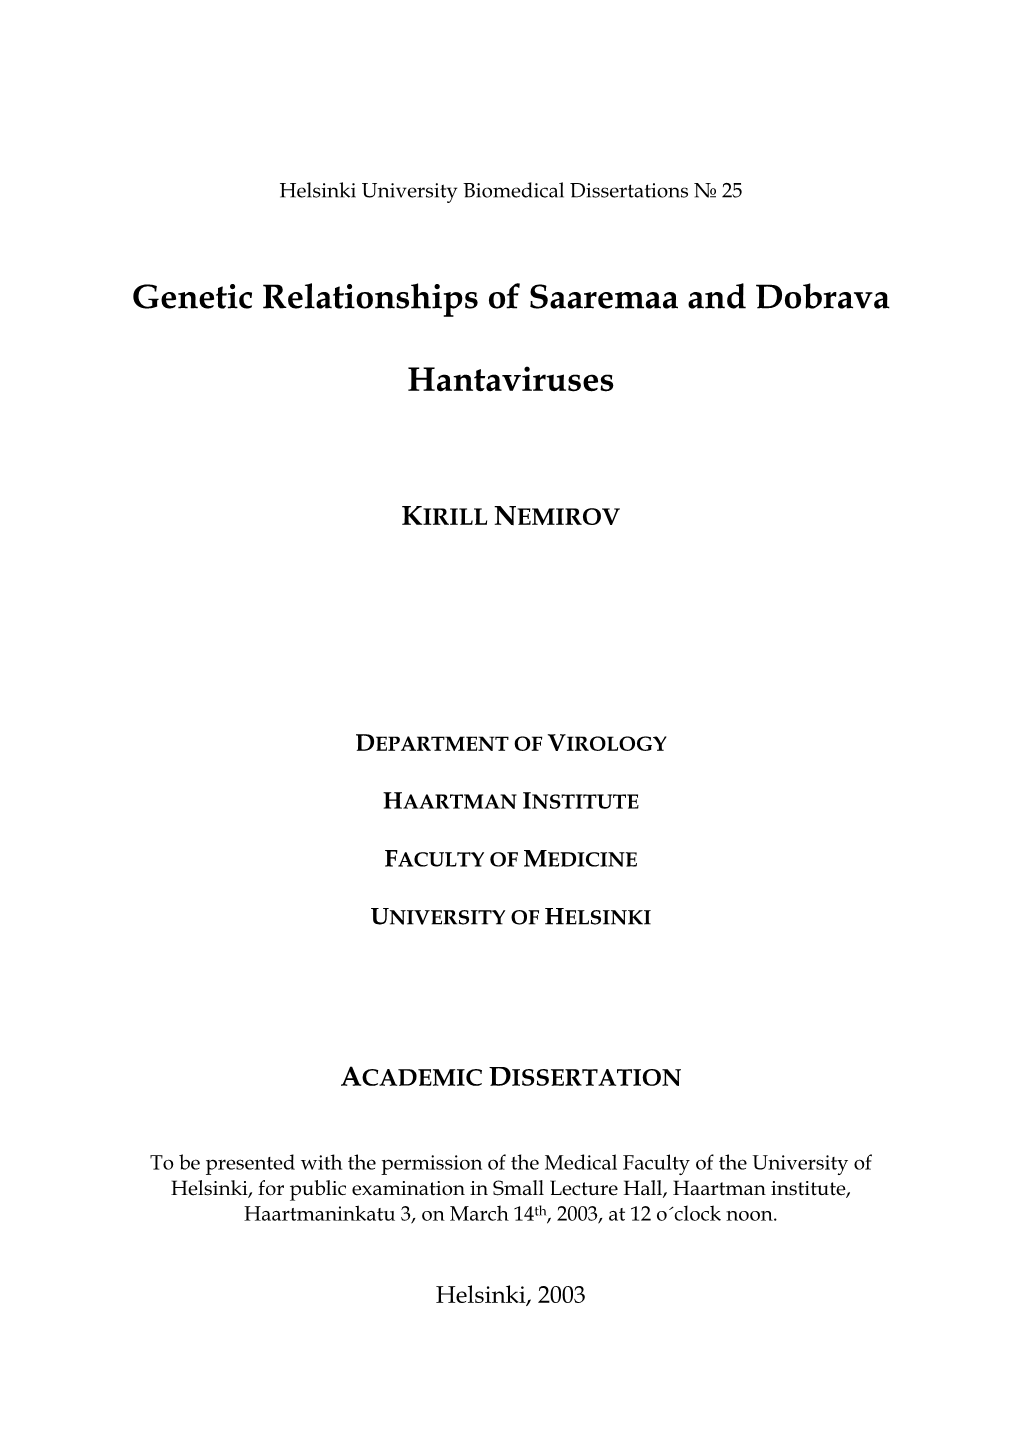 Genetic Relationships of Saaremaa and Dobrava